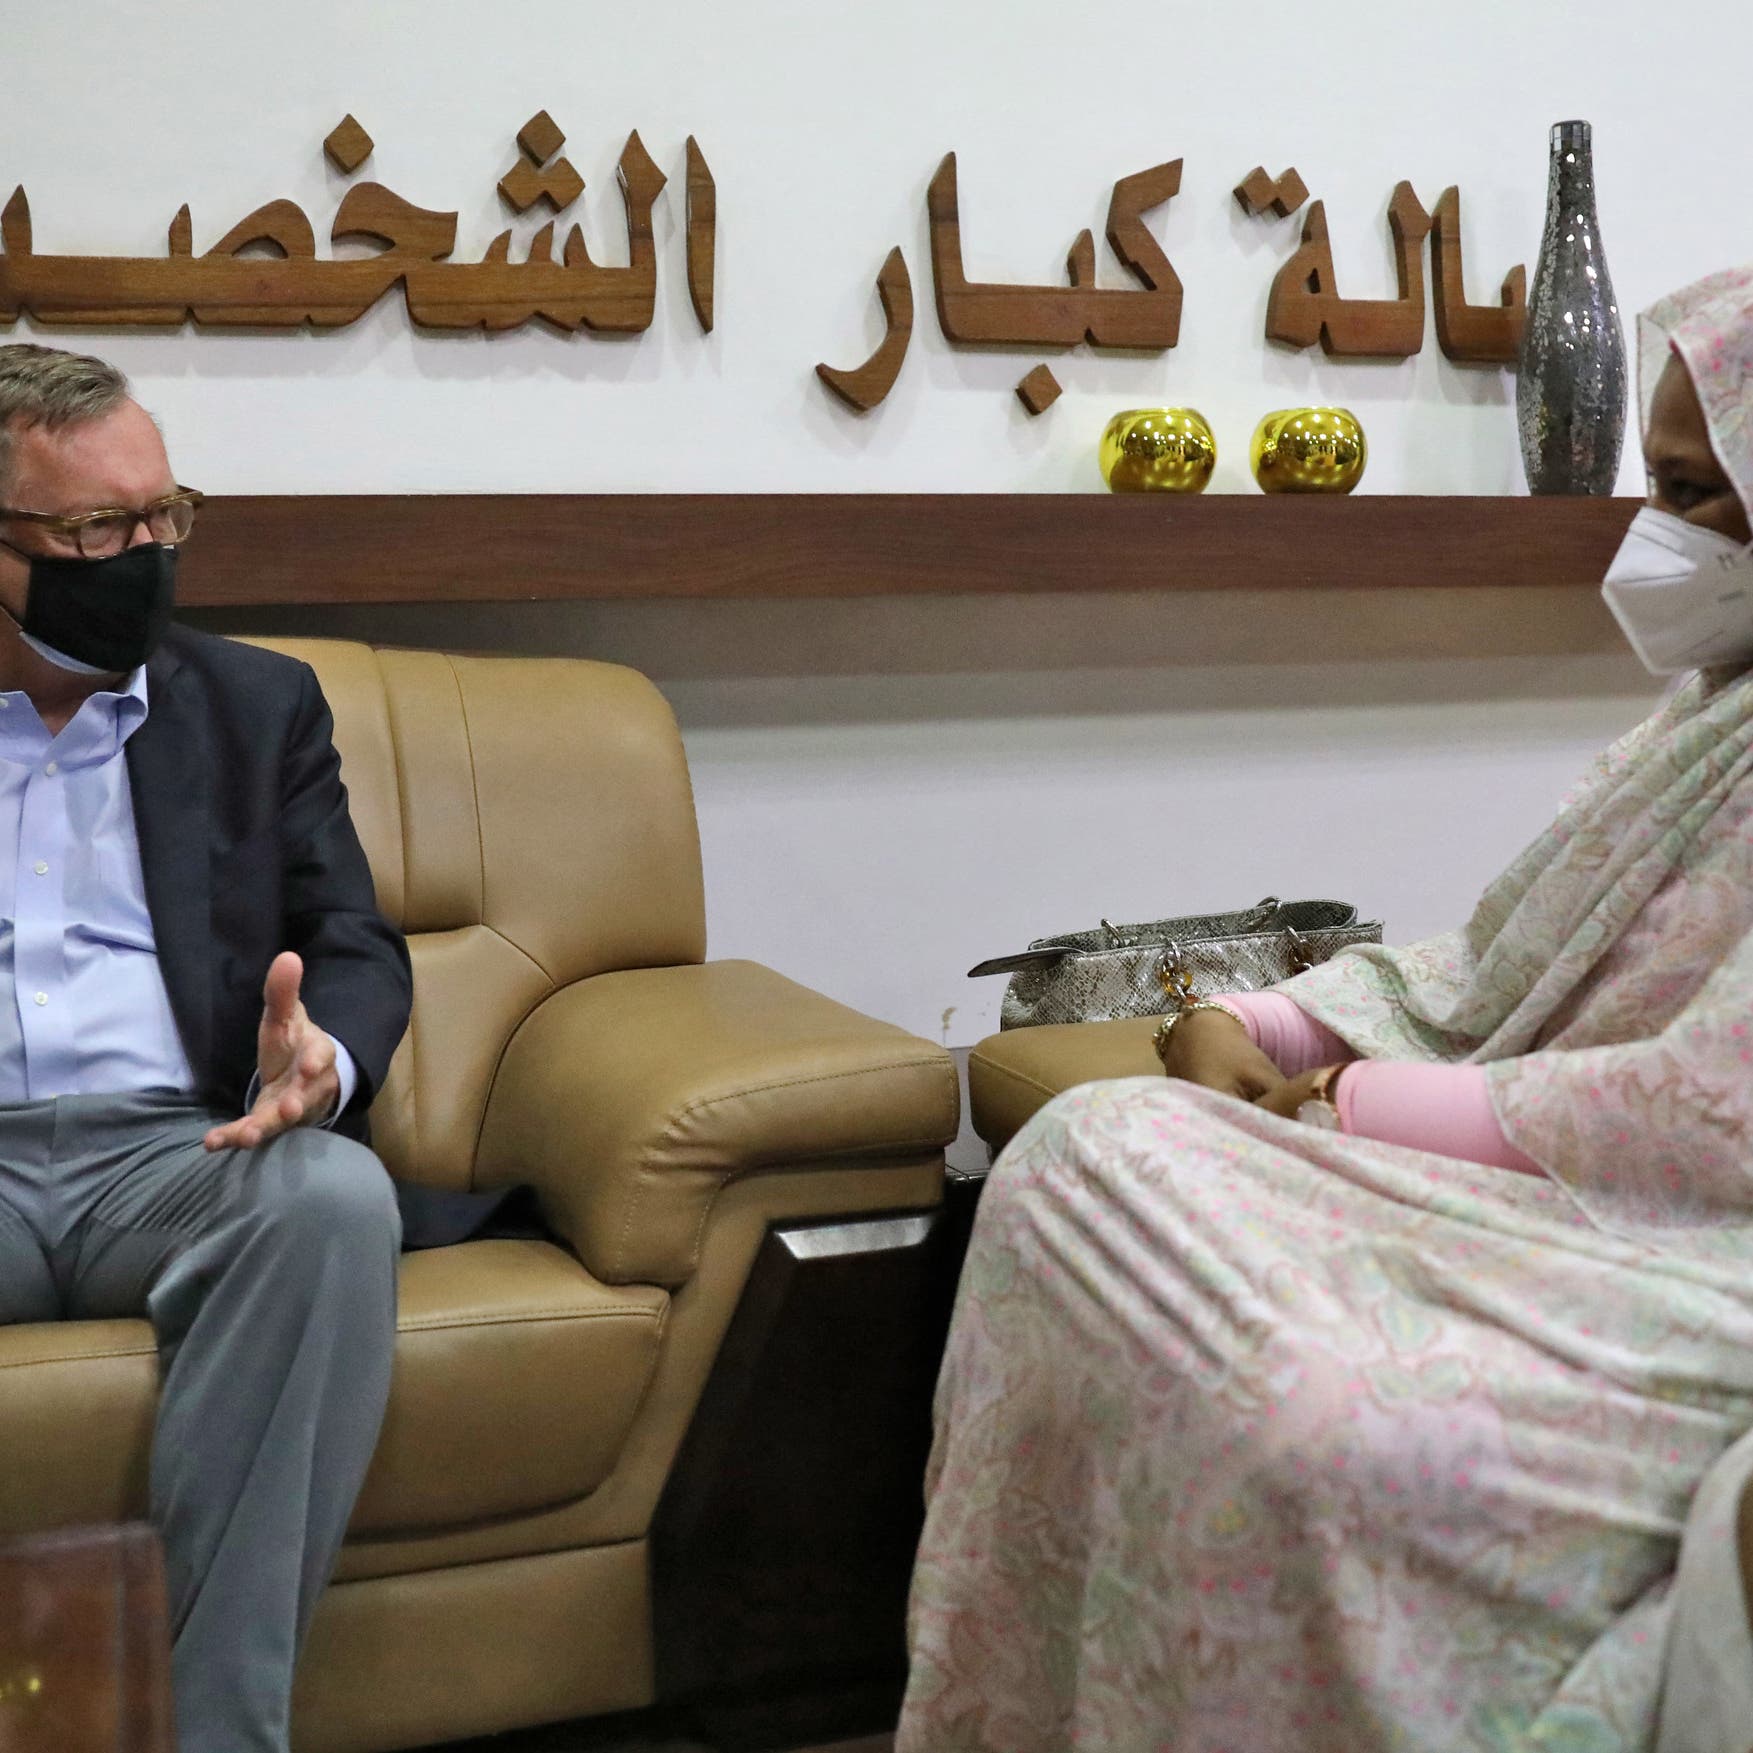 US envoy Feltman back in Ethiopia after Kenya trip: State Department